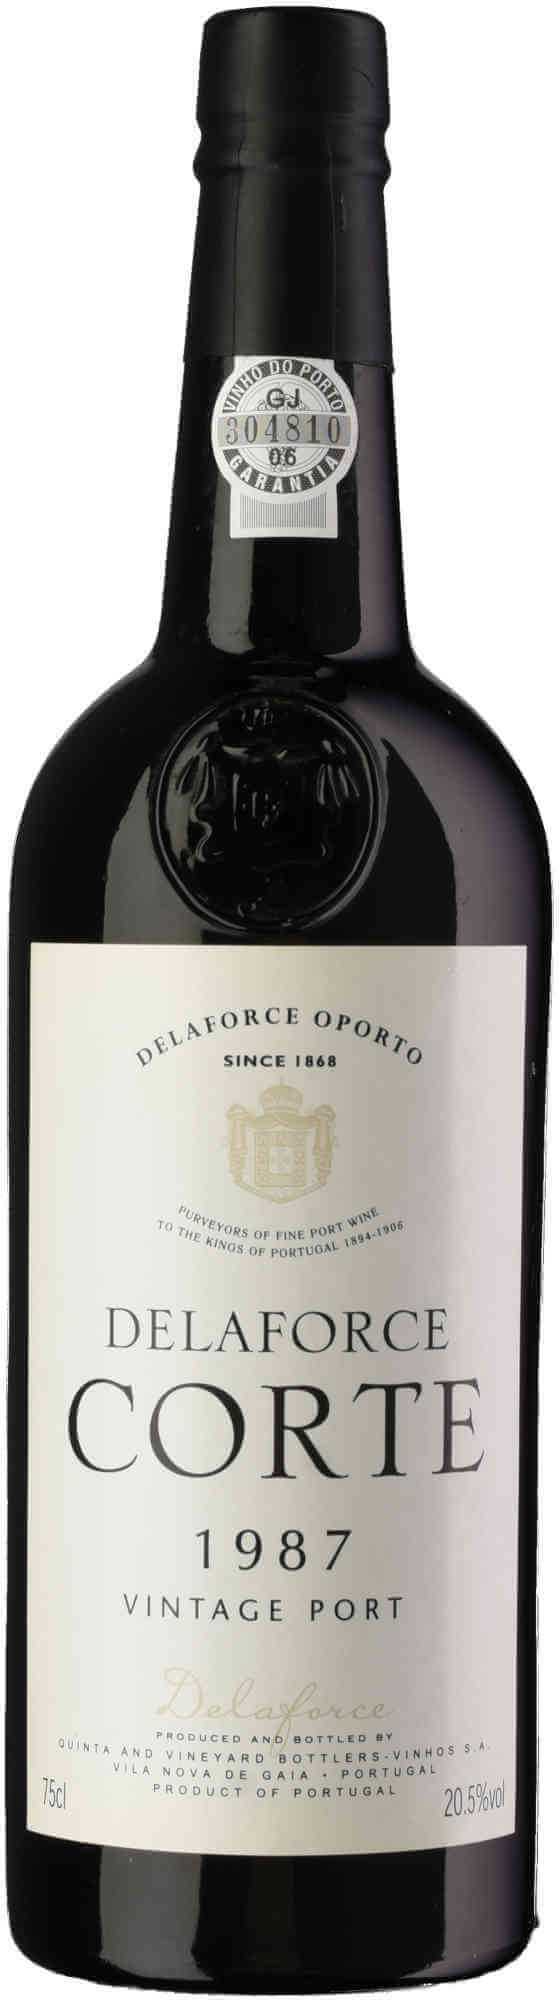 Delaforce-Corte-Vintage-Port-1987